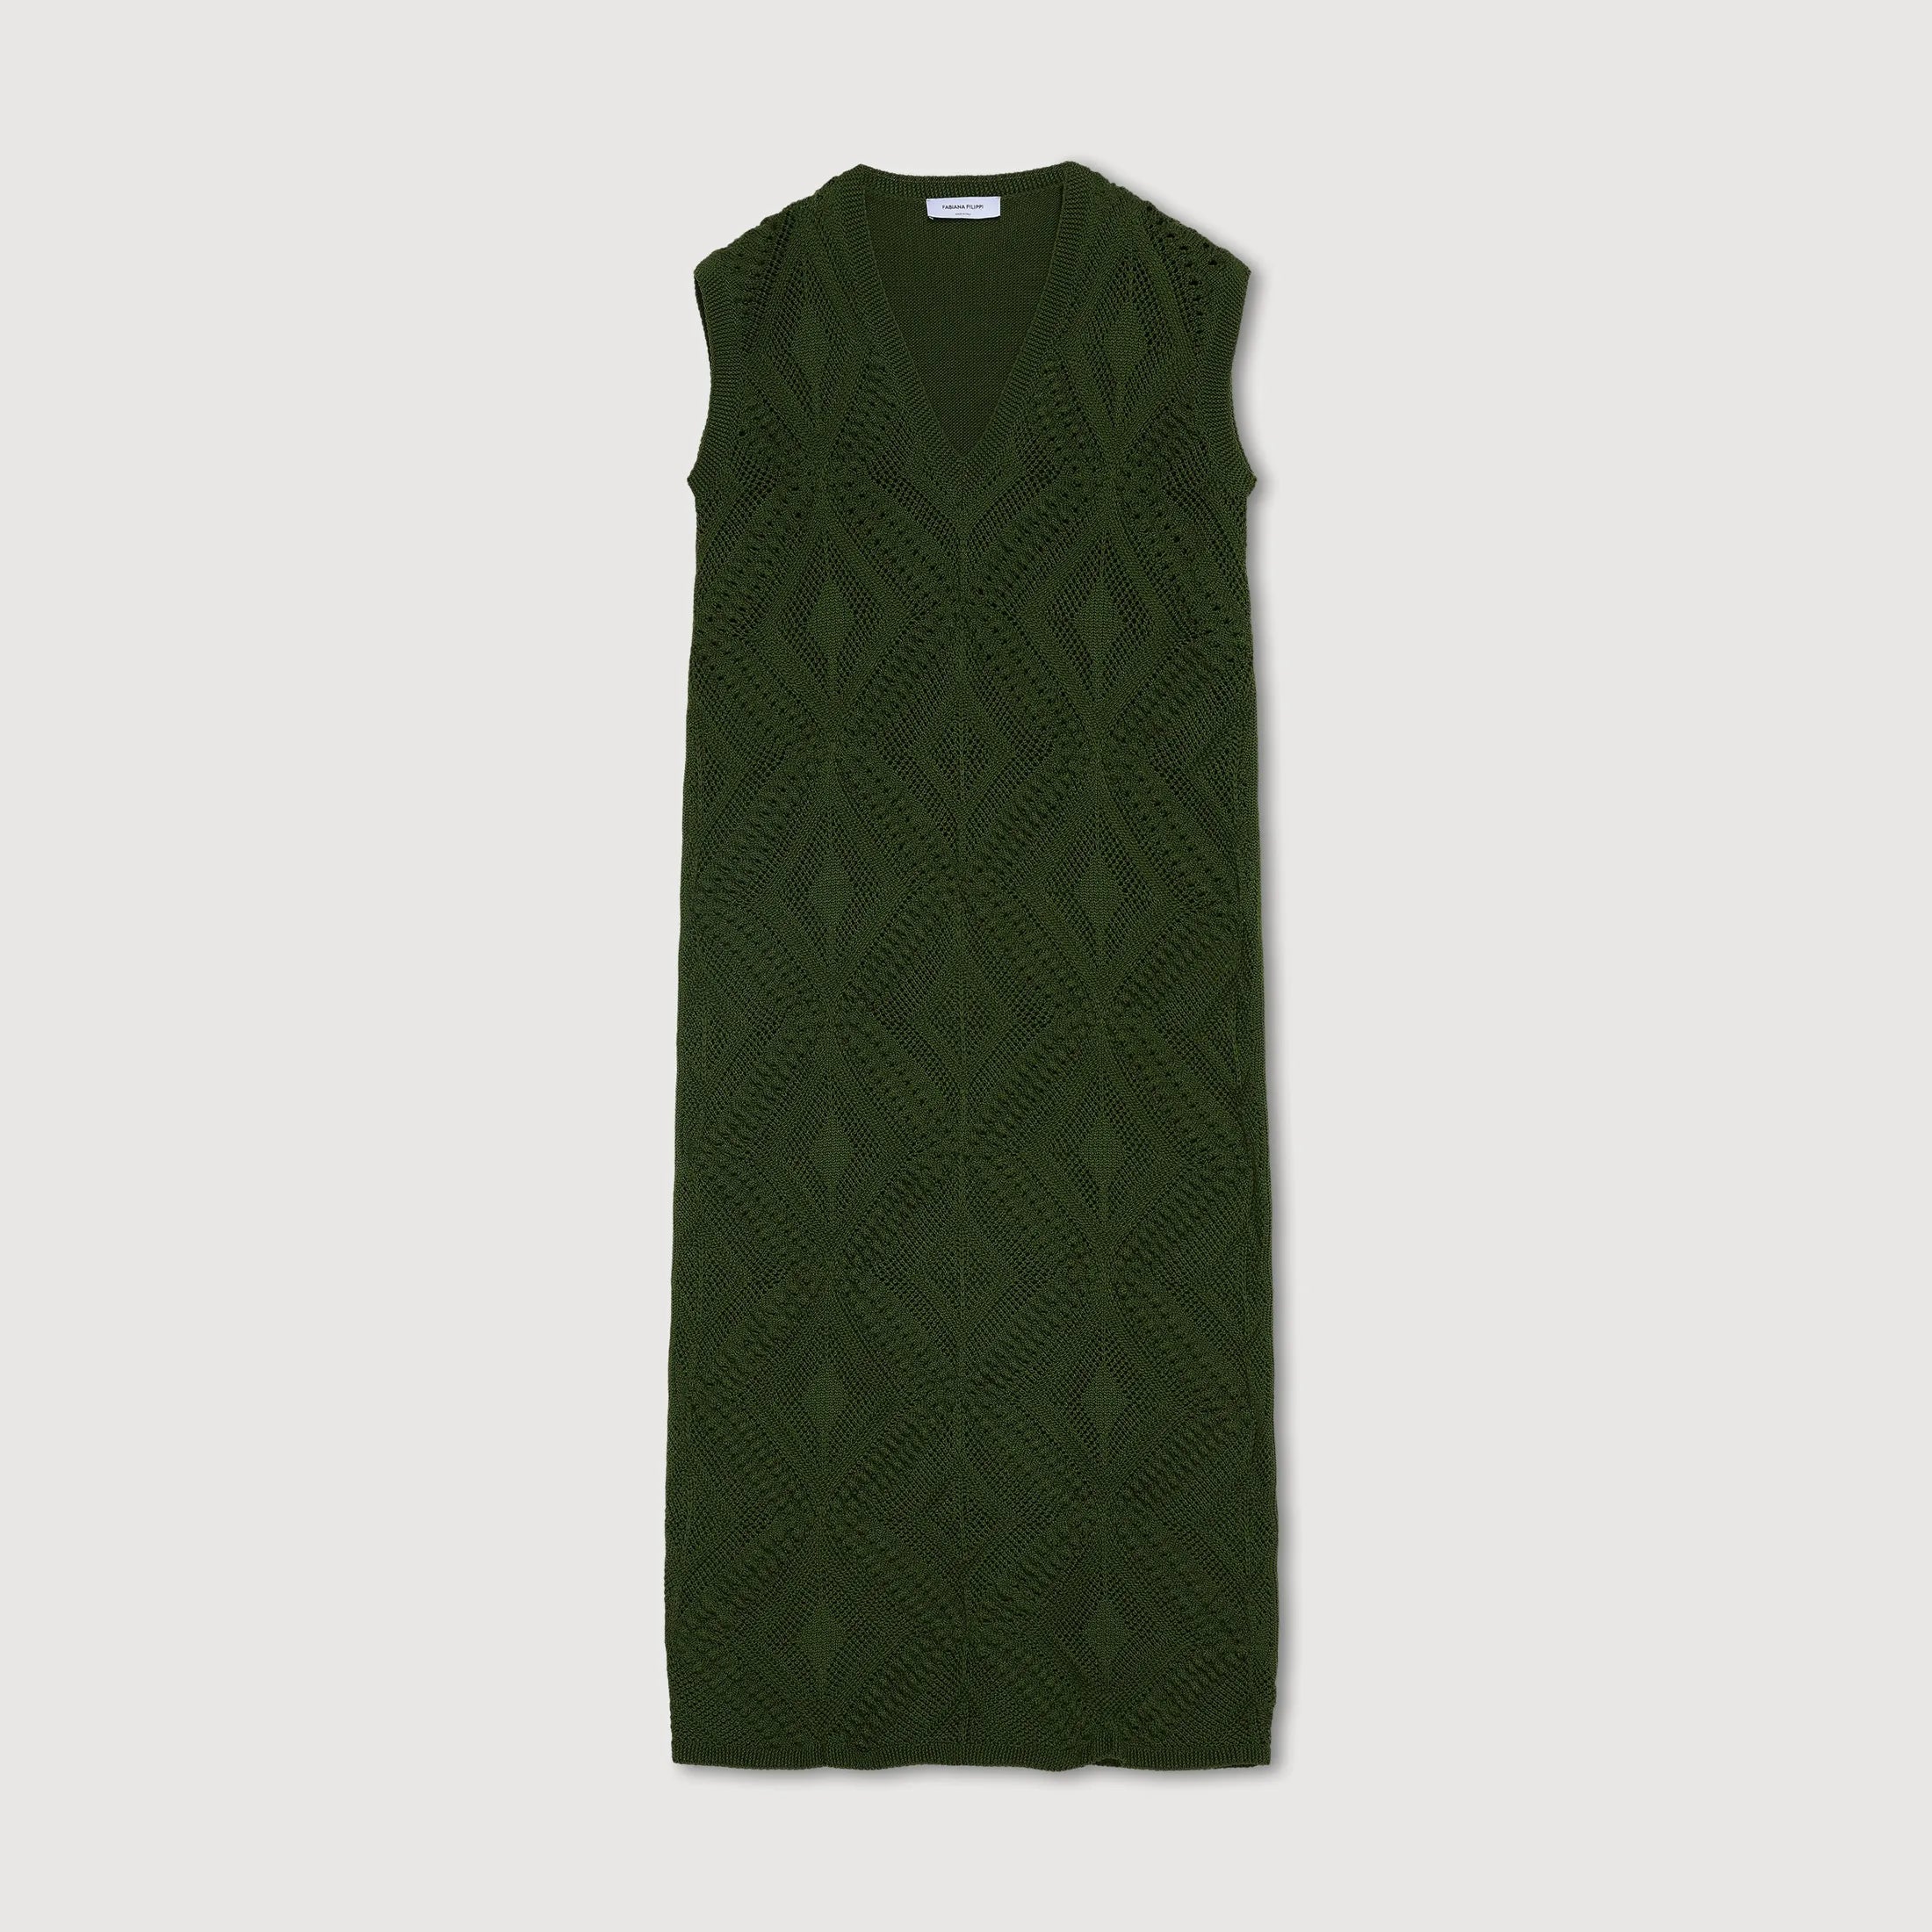 FABIANA FILIPPI - Knitted Dress in Algae Green